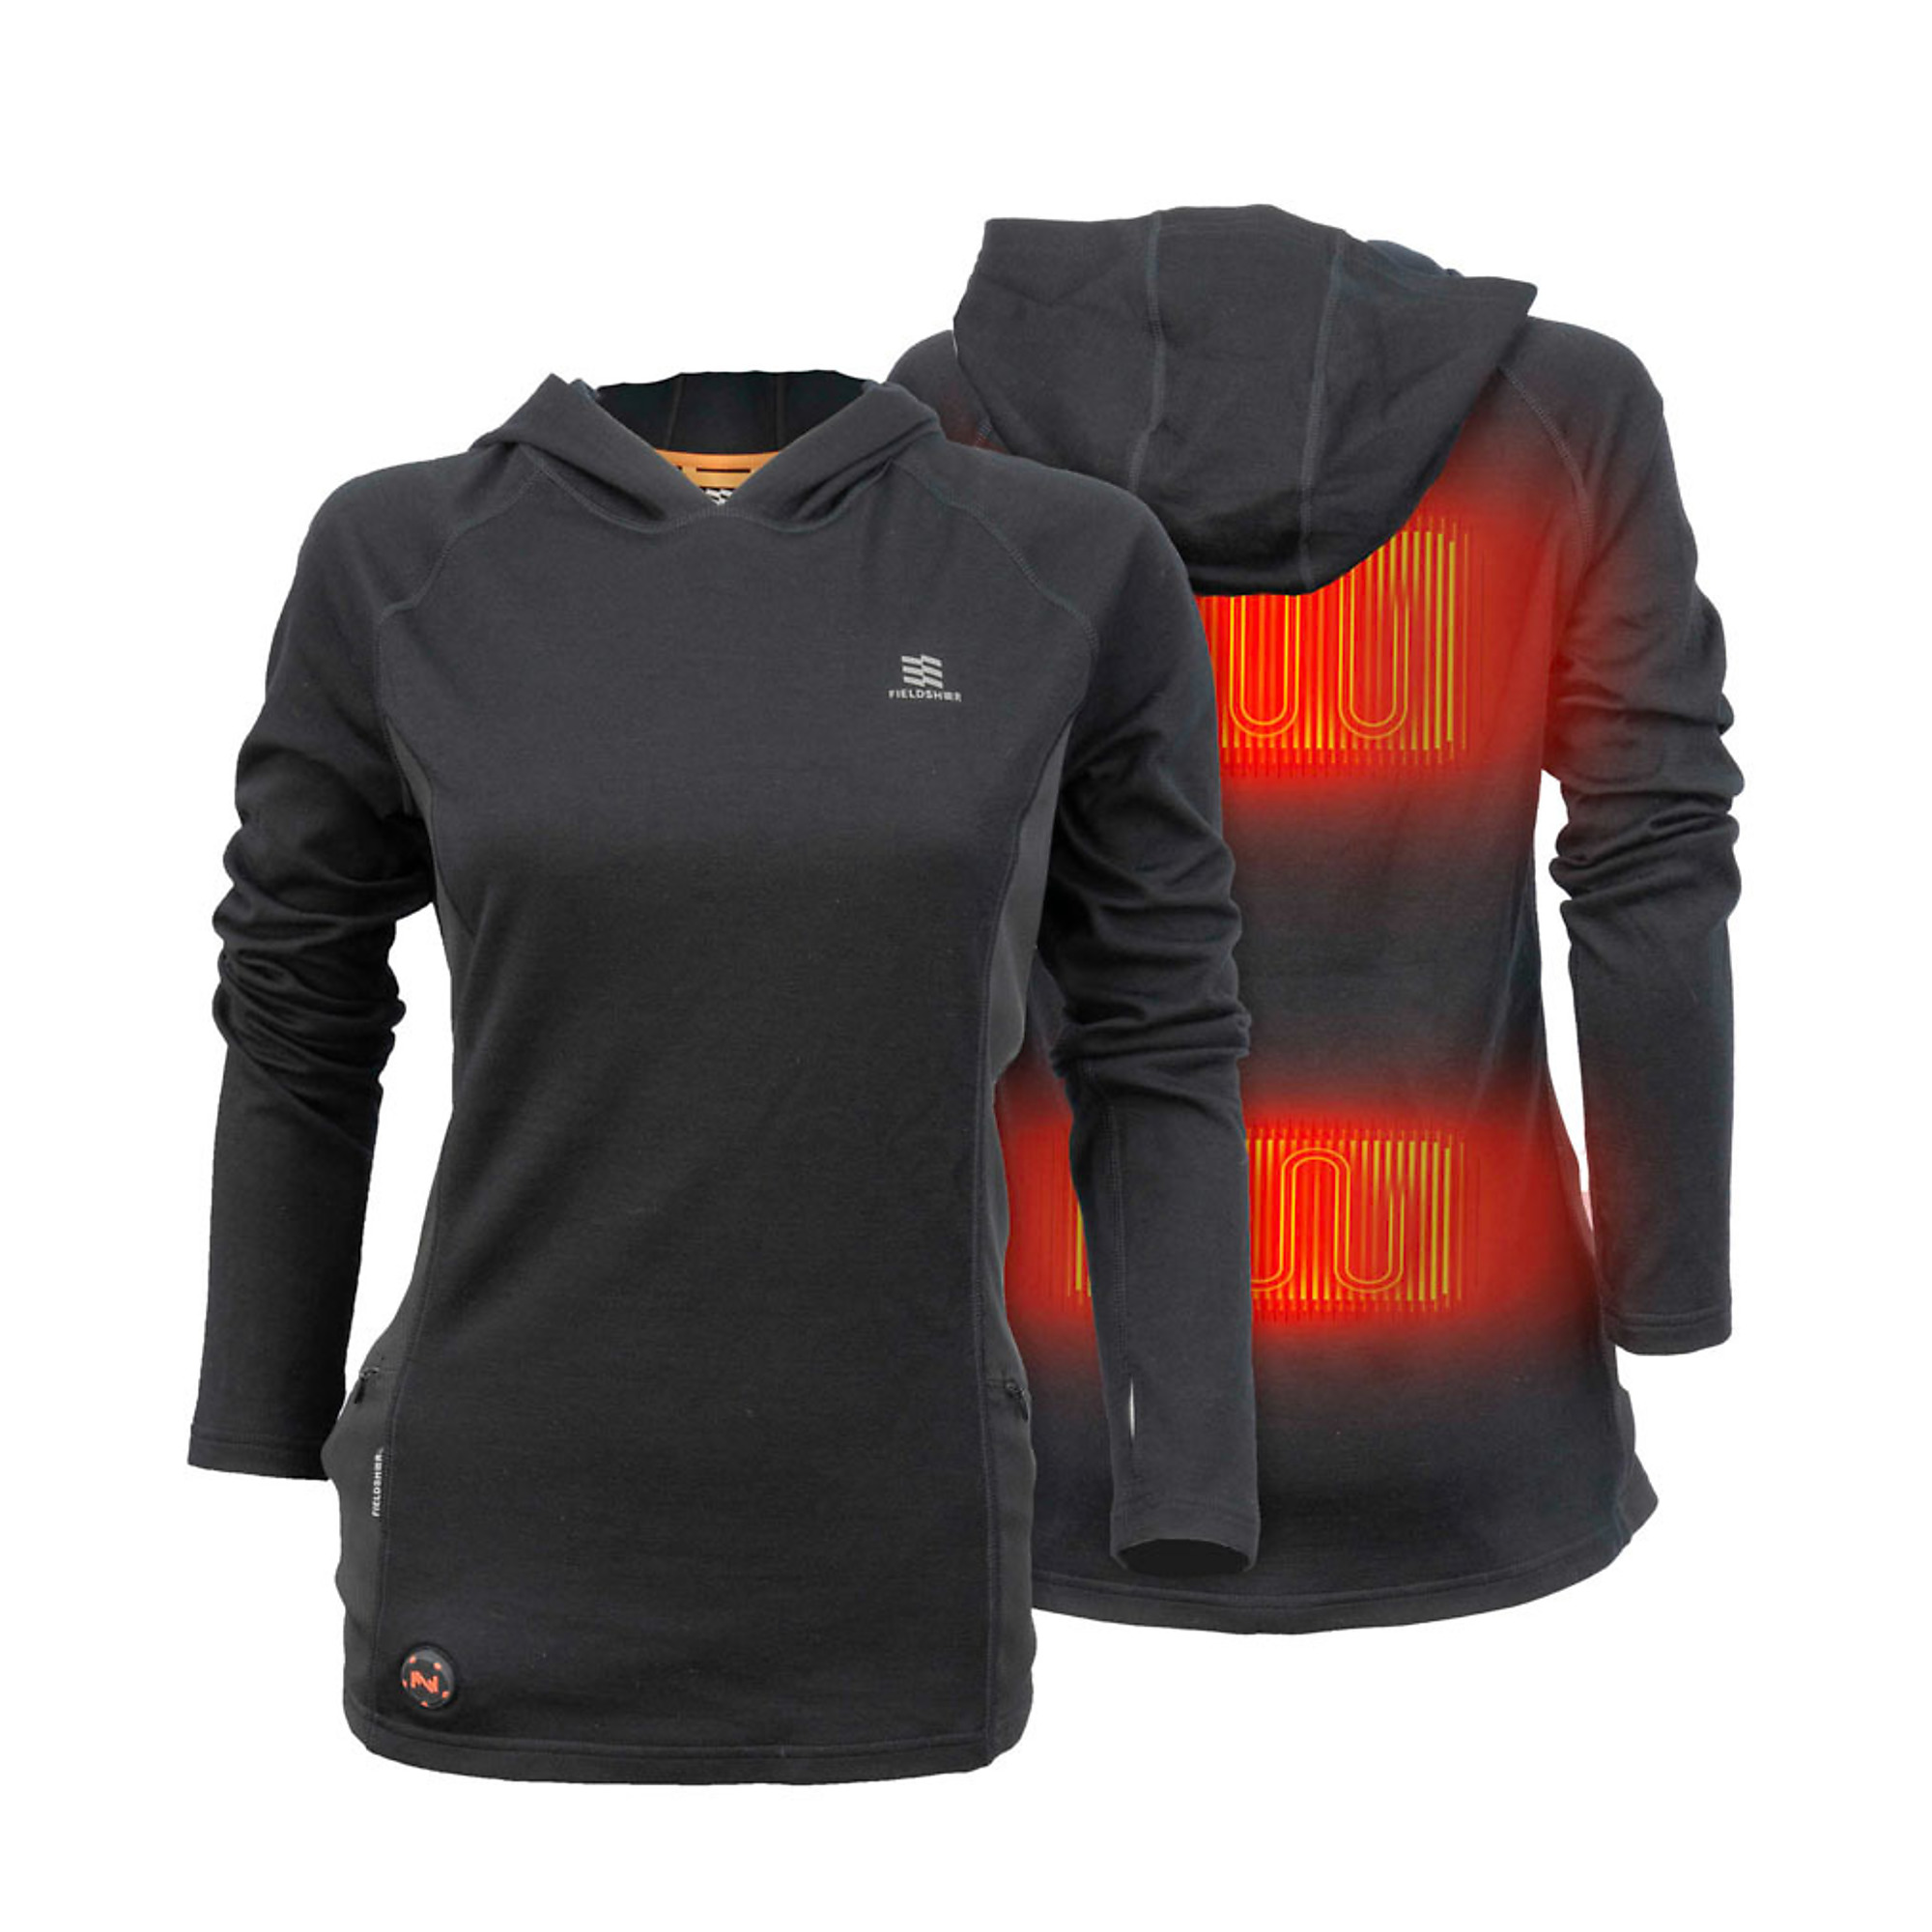 Fieldsheer, Women's Merino Heated Baselayer Shirt, Size L, Color Black, Model MWWT14010421